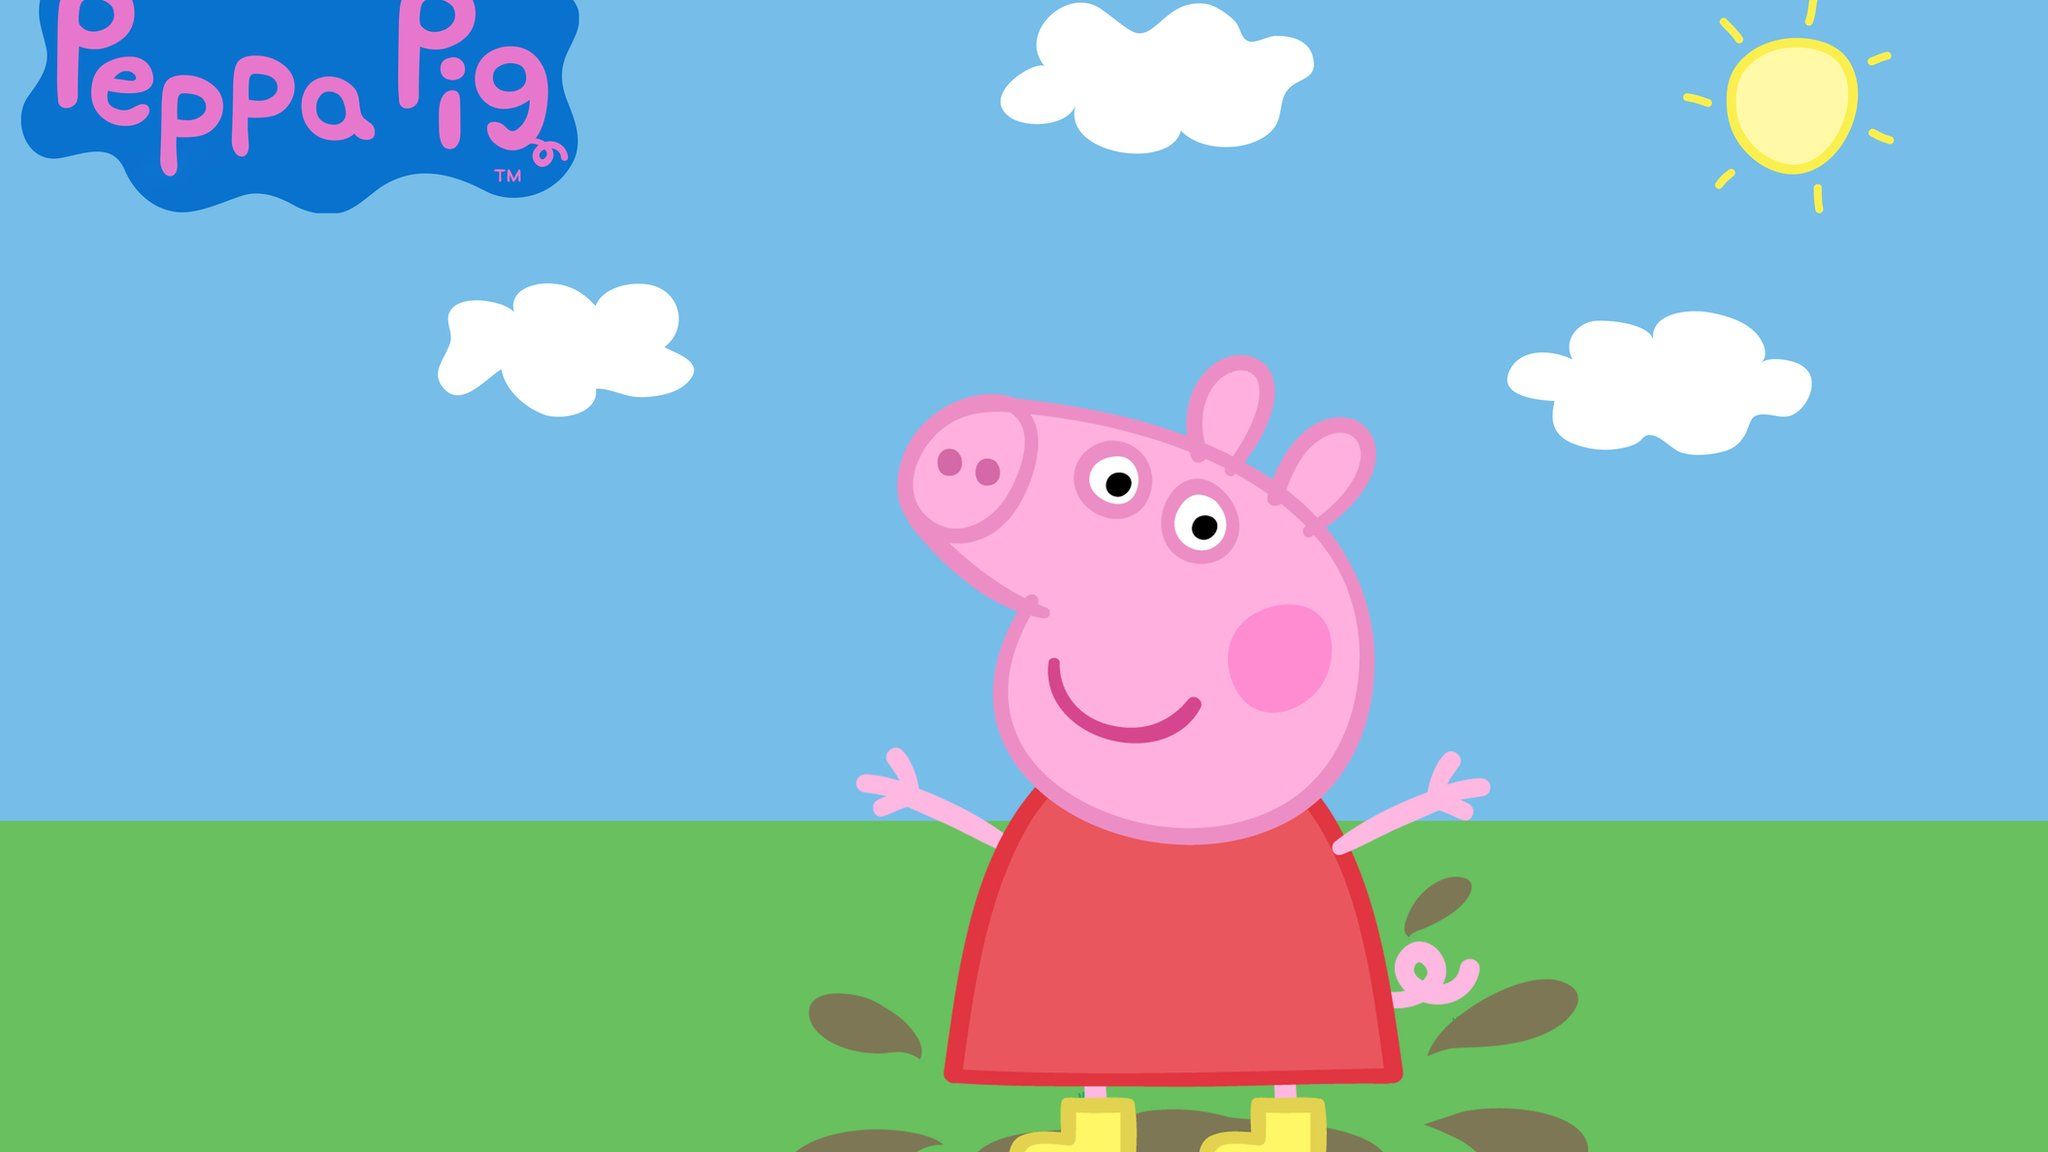 Peppa Pig, the animated cartoon character